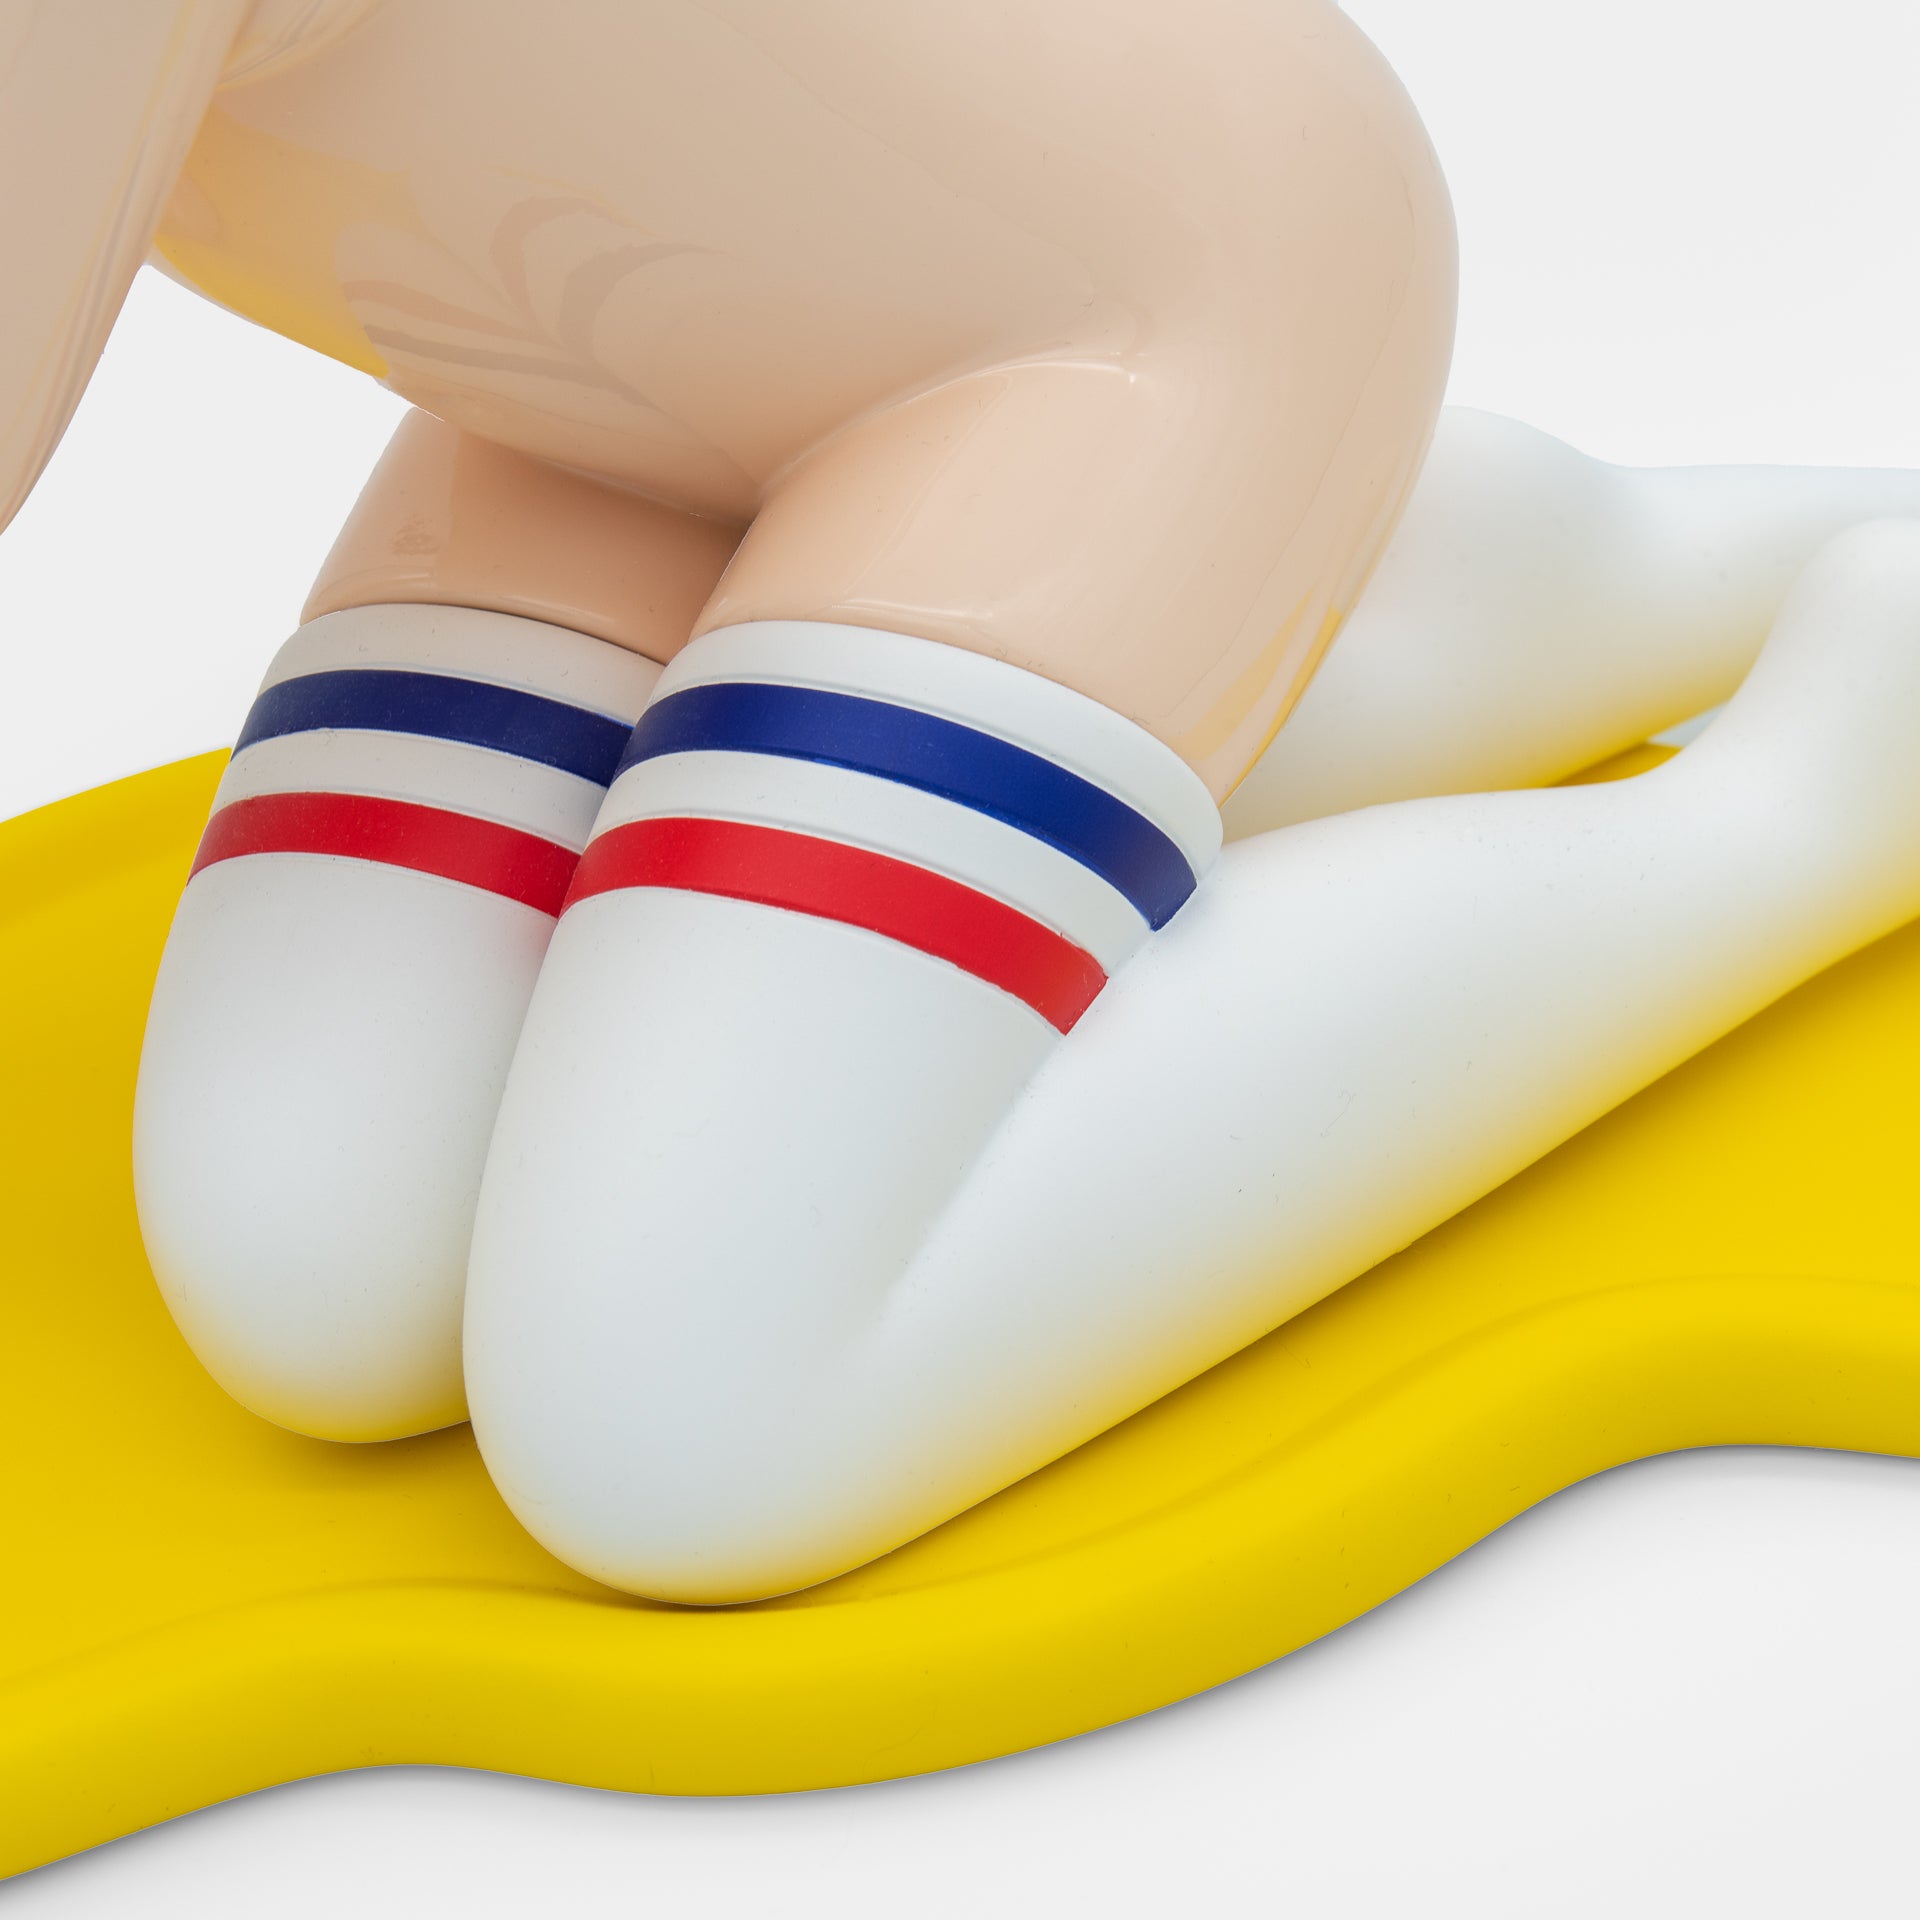 Venus with Socks by Takeru Amano